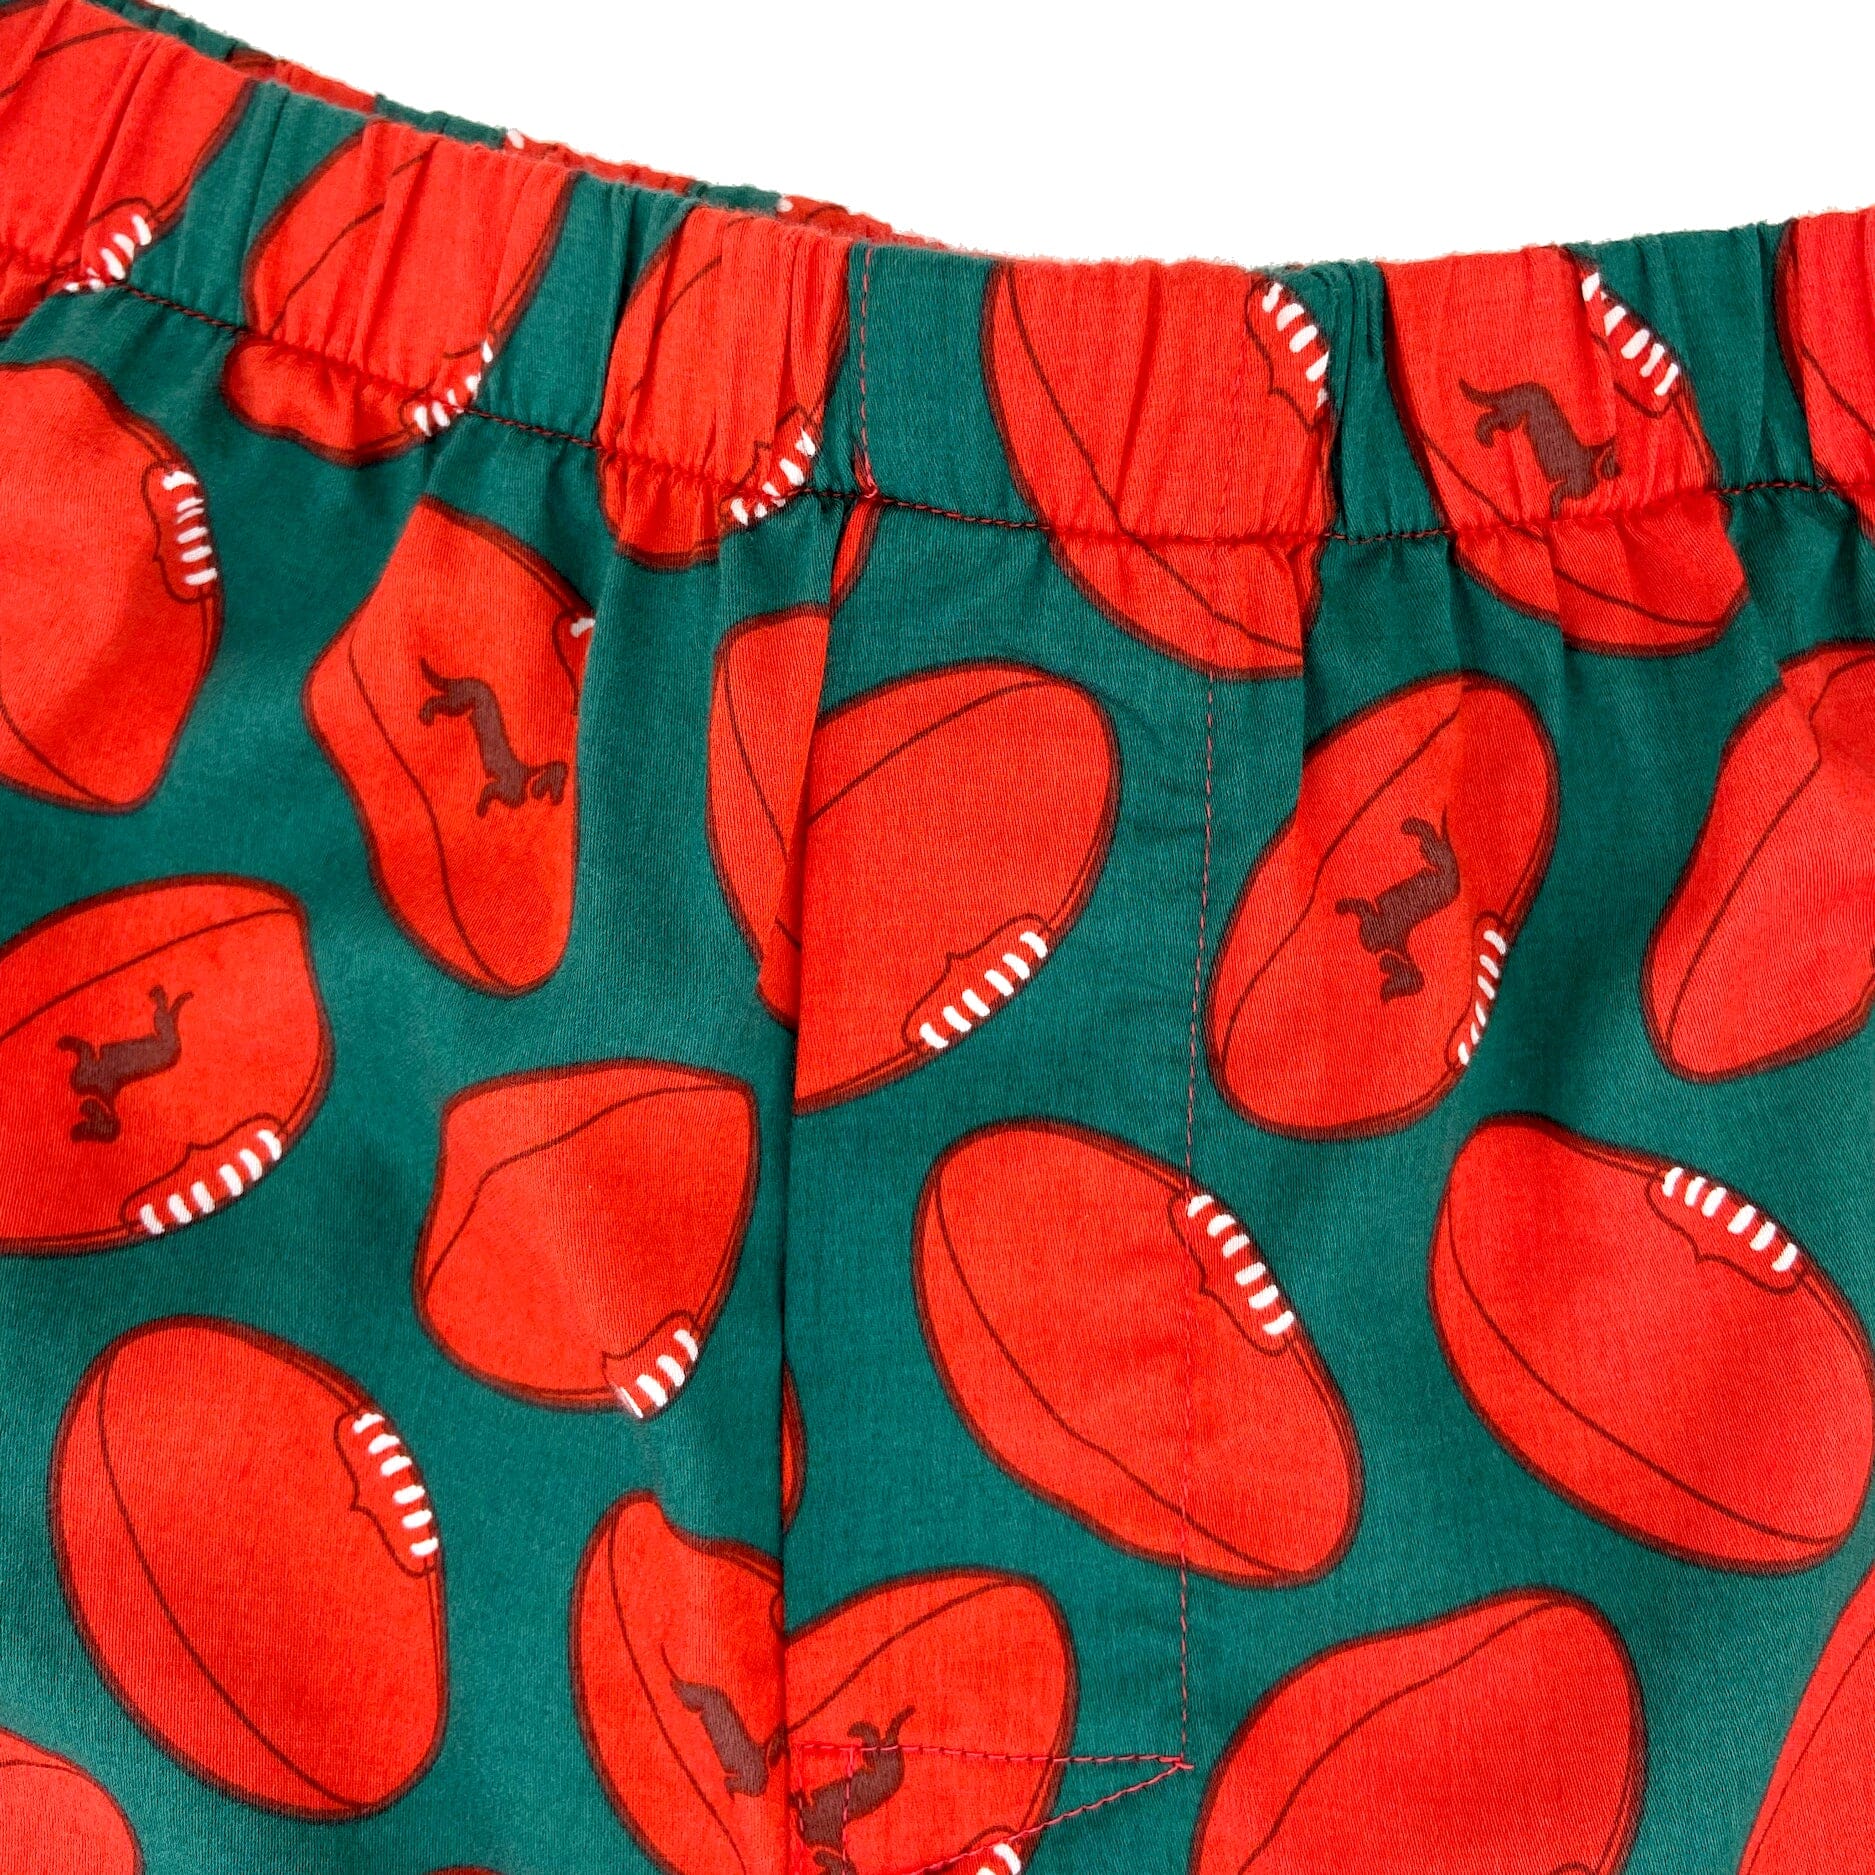 Men's Sport Themed Football Patterned Cotton Boxer Shorts Underwear